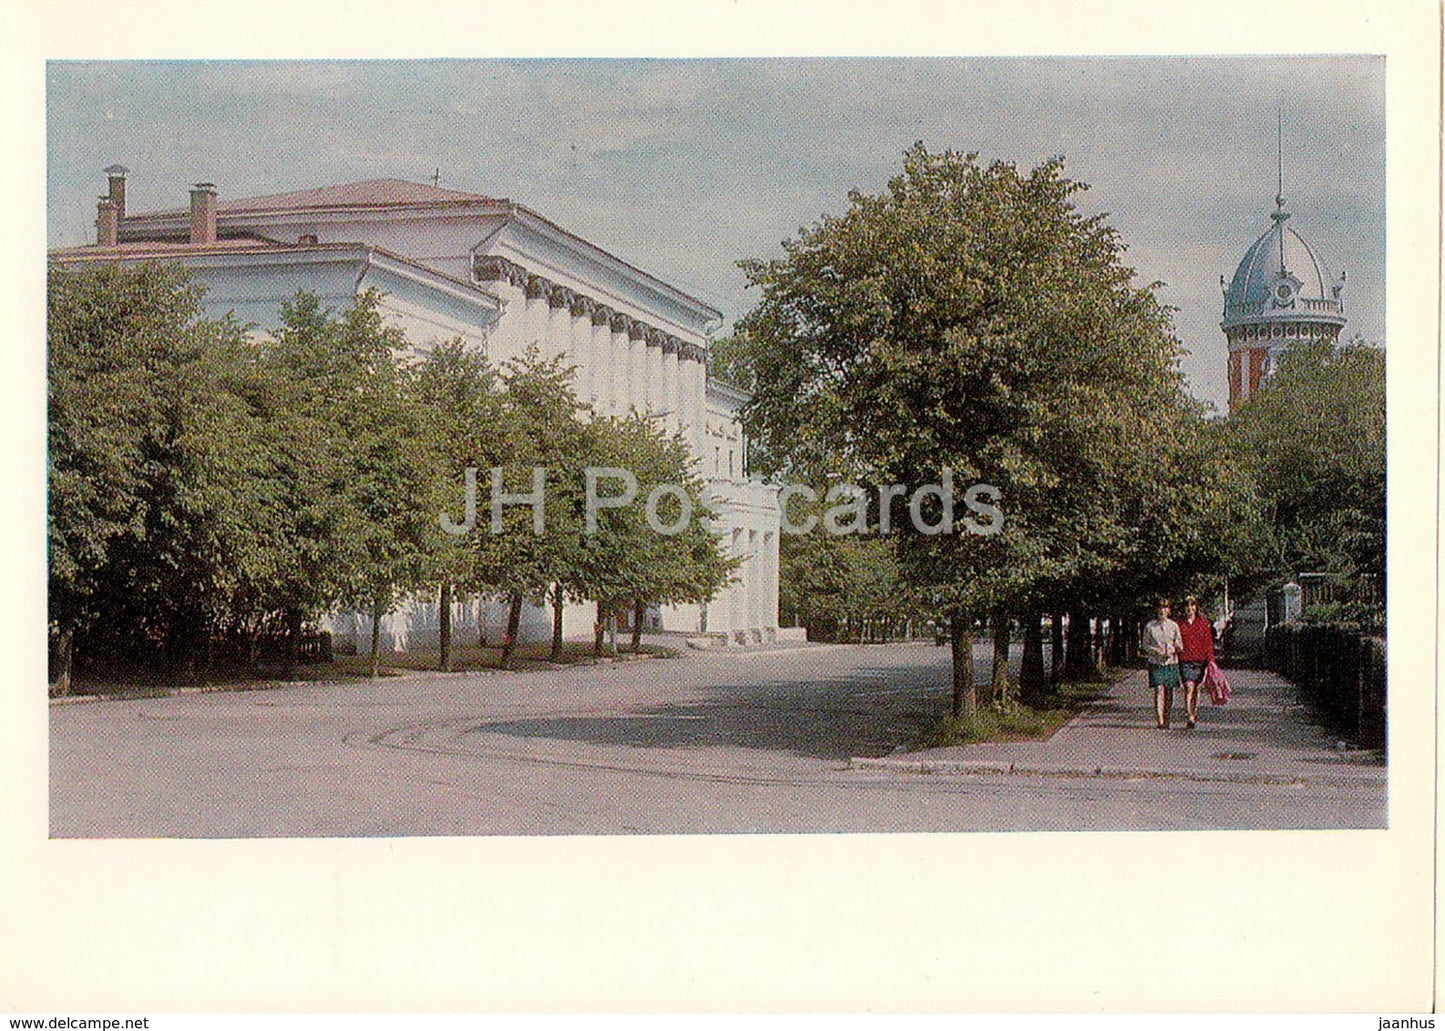 Ulyanovsk - Regional Library - 1969 - Russia USSR - unused - JH Postcards